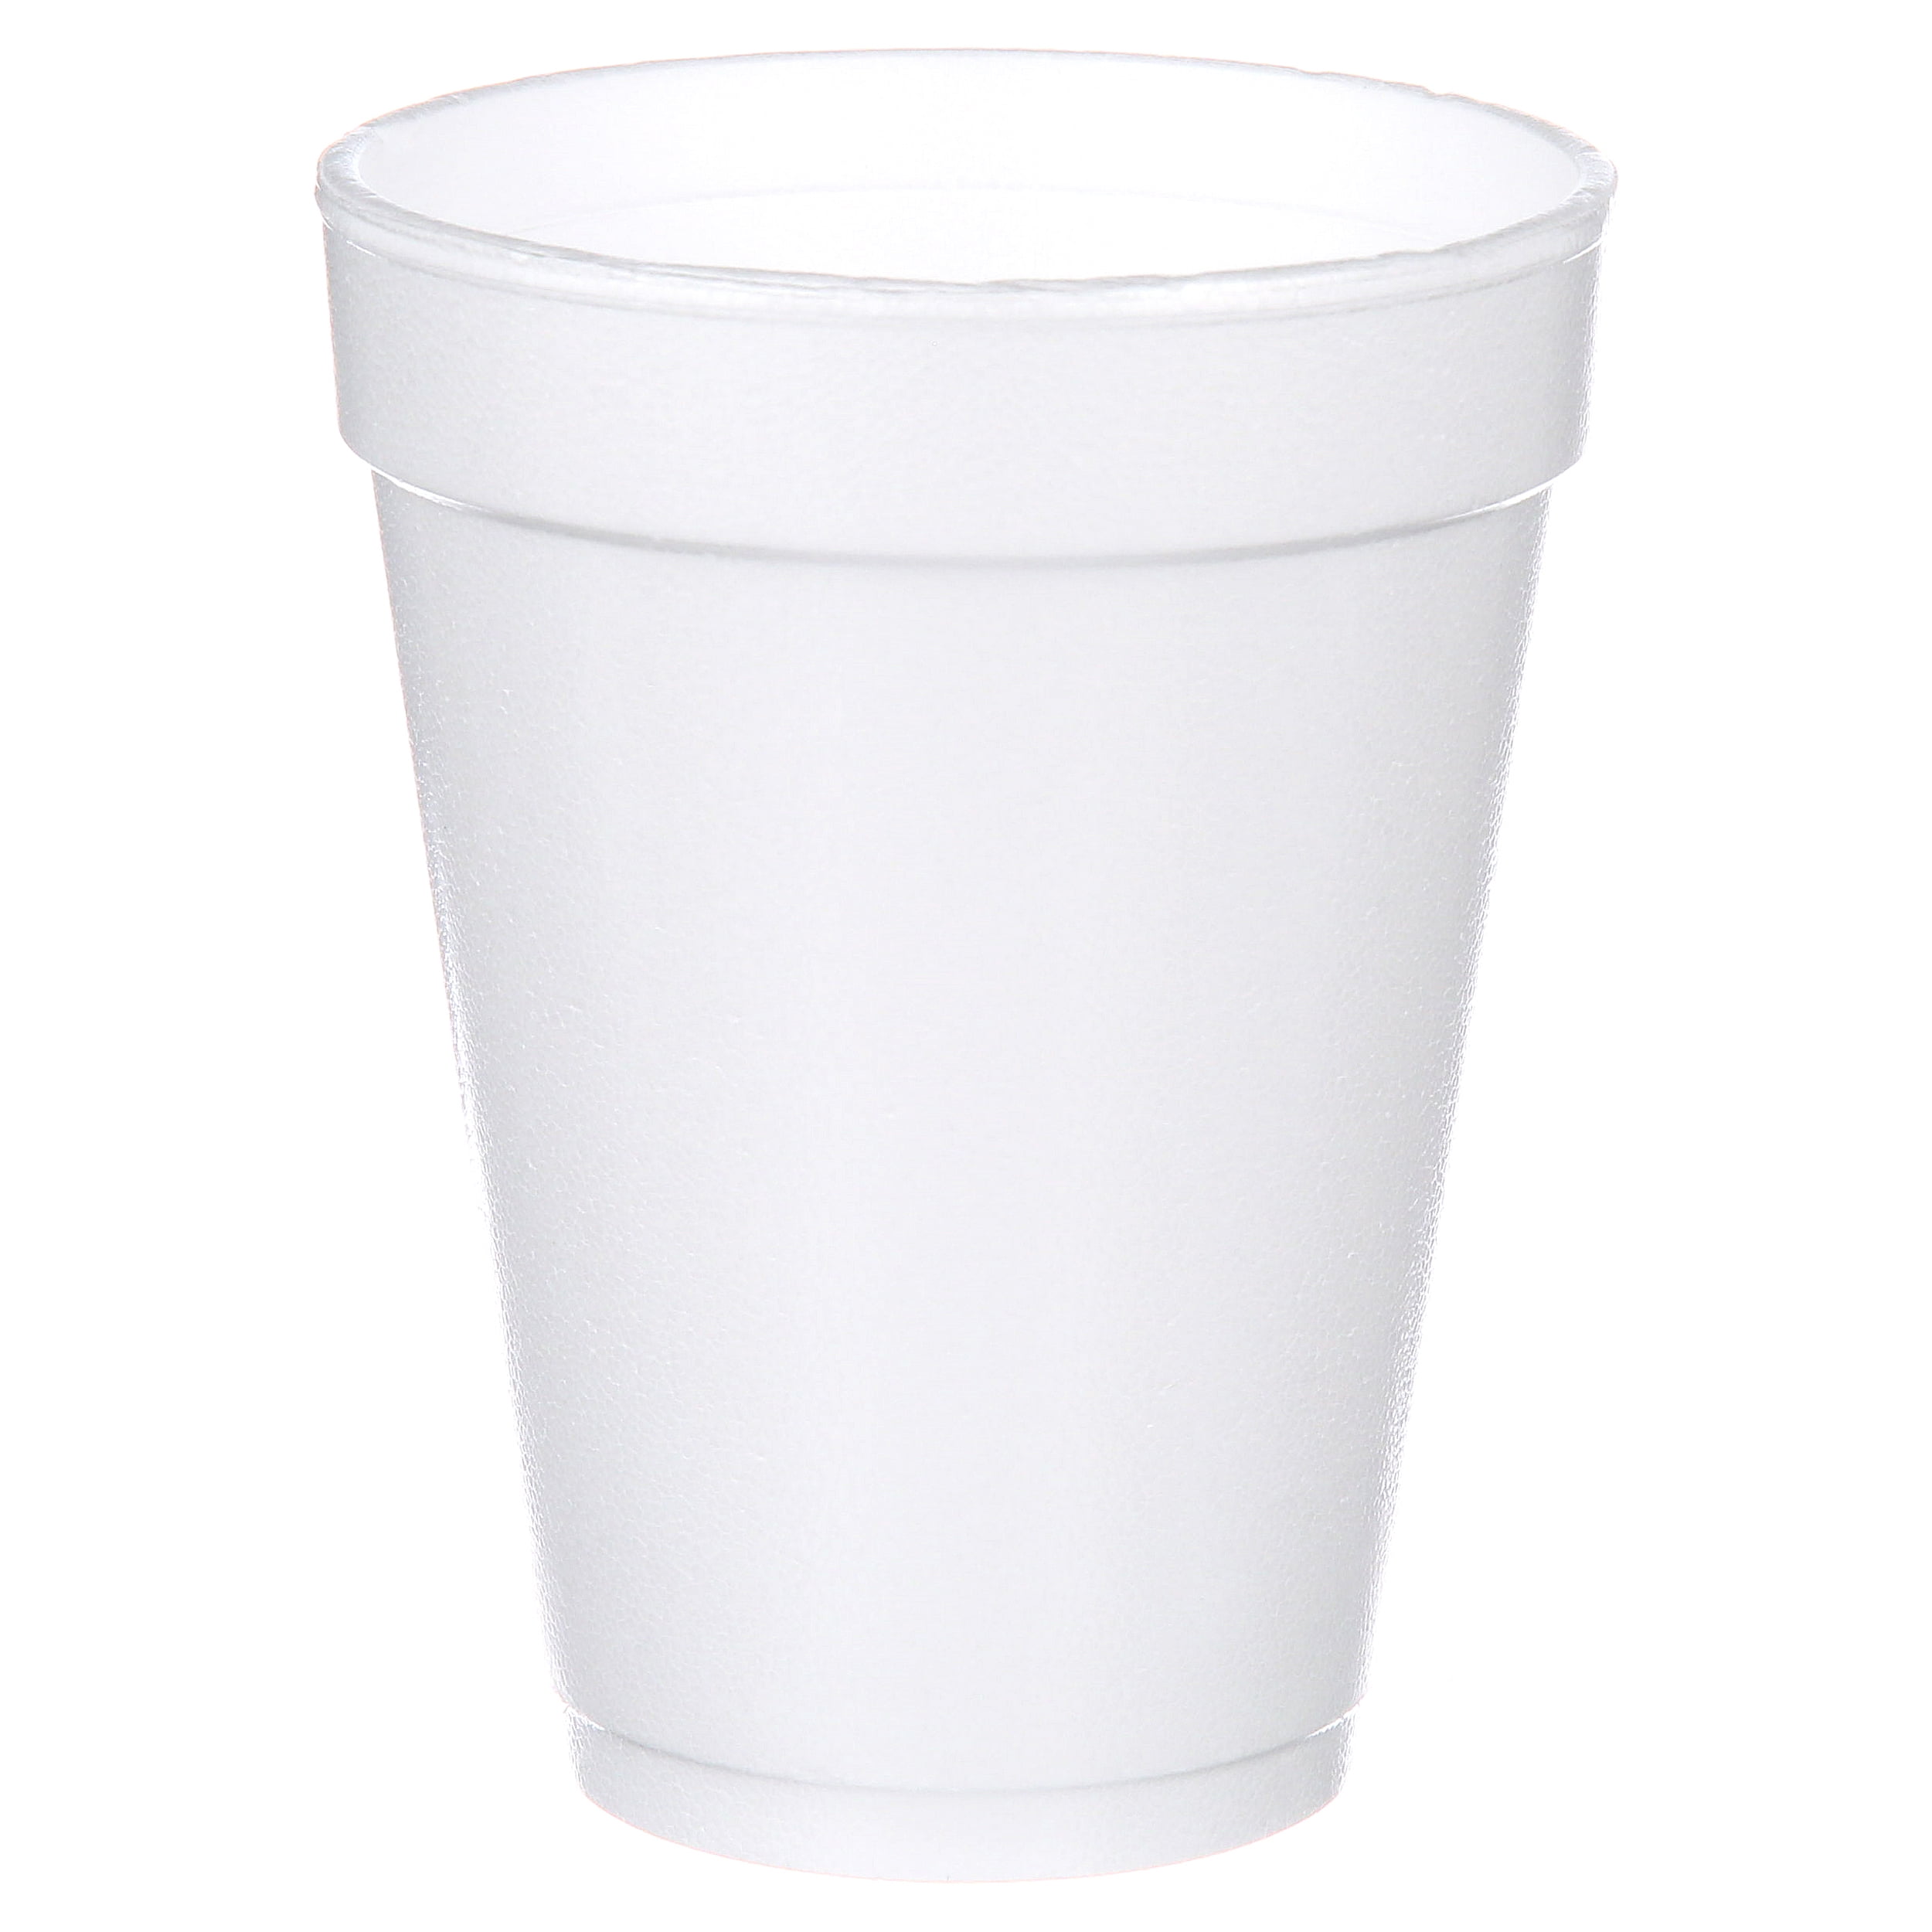 100 Sets) 16 oz White Foam Cups with Lift'n'Lock Lids and BONUS Stirrers